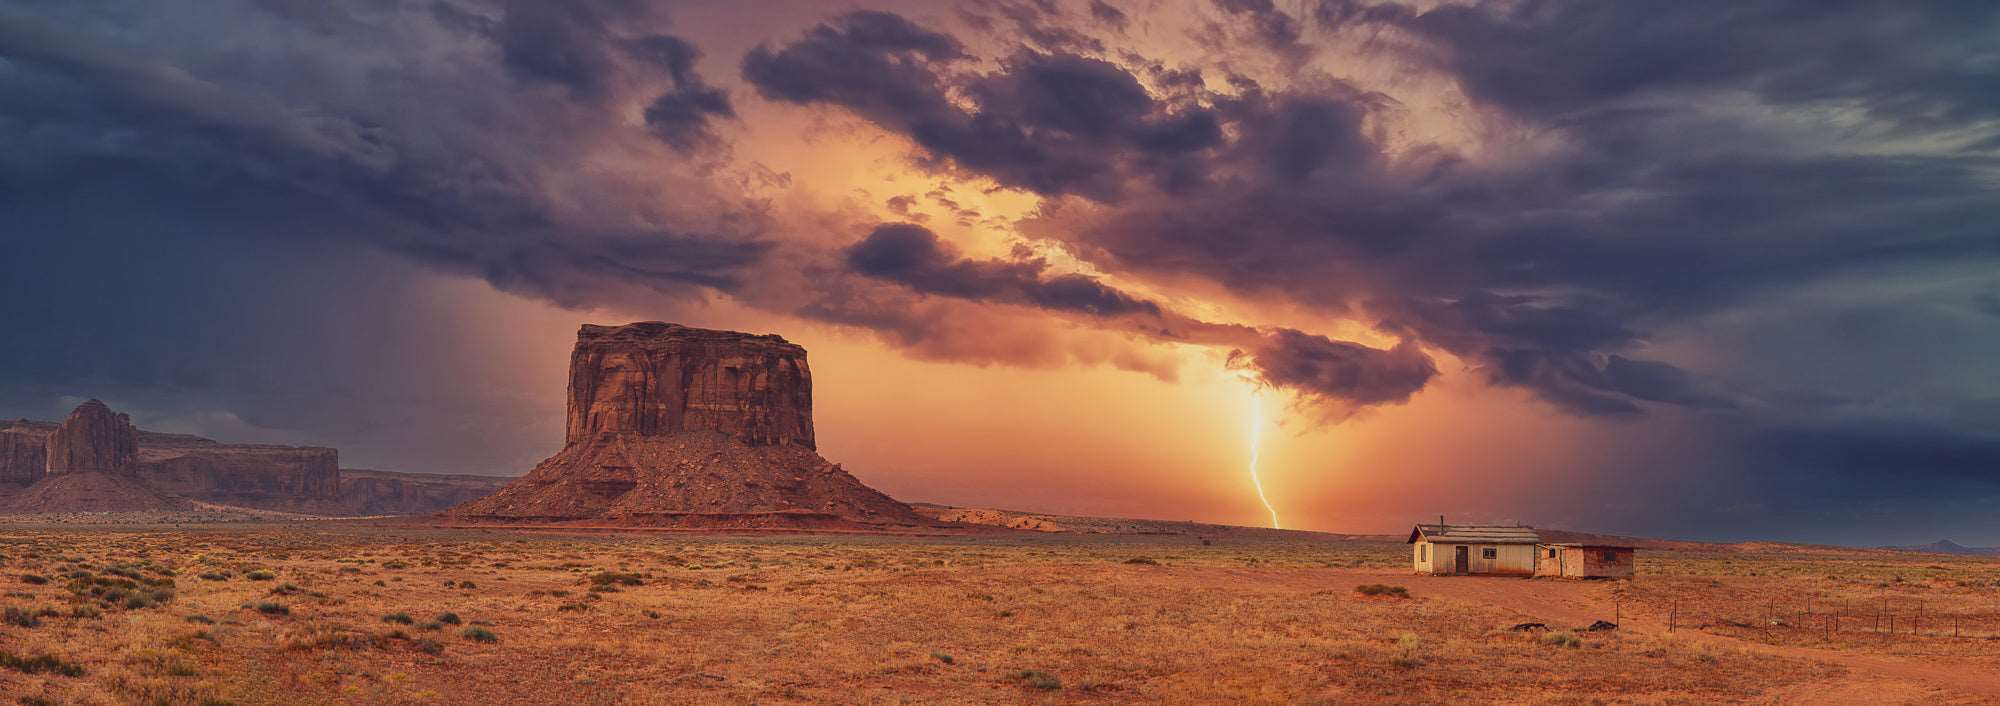 Thunderstrike: Navajo's Monument Storm - Stephen Milner